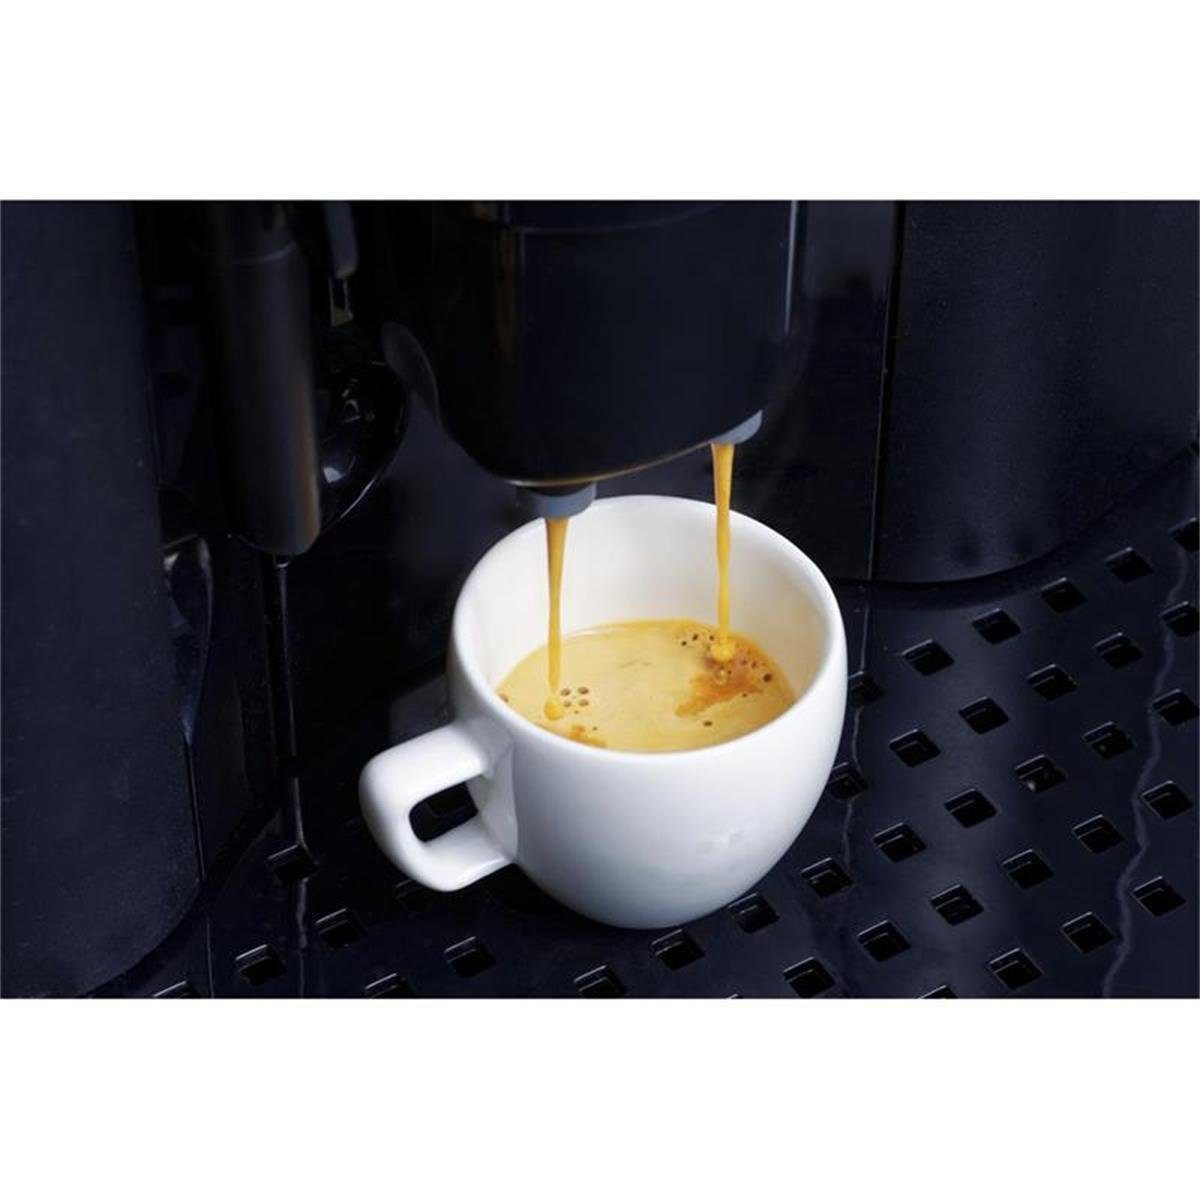 Wark24 Philli 1000 für Kaffeevollautomat ml Flüssig Saeco, Entkalker Siemens, Entkalker